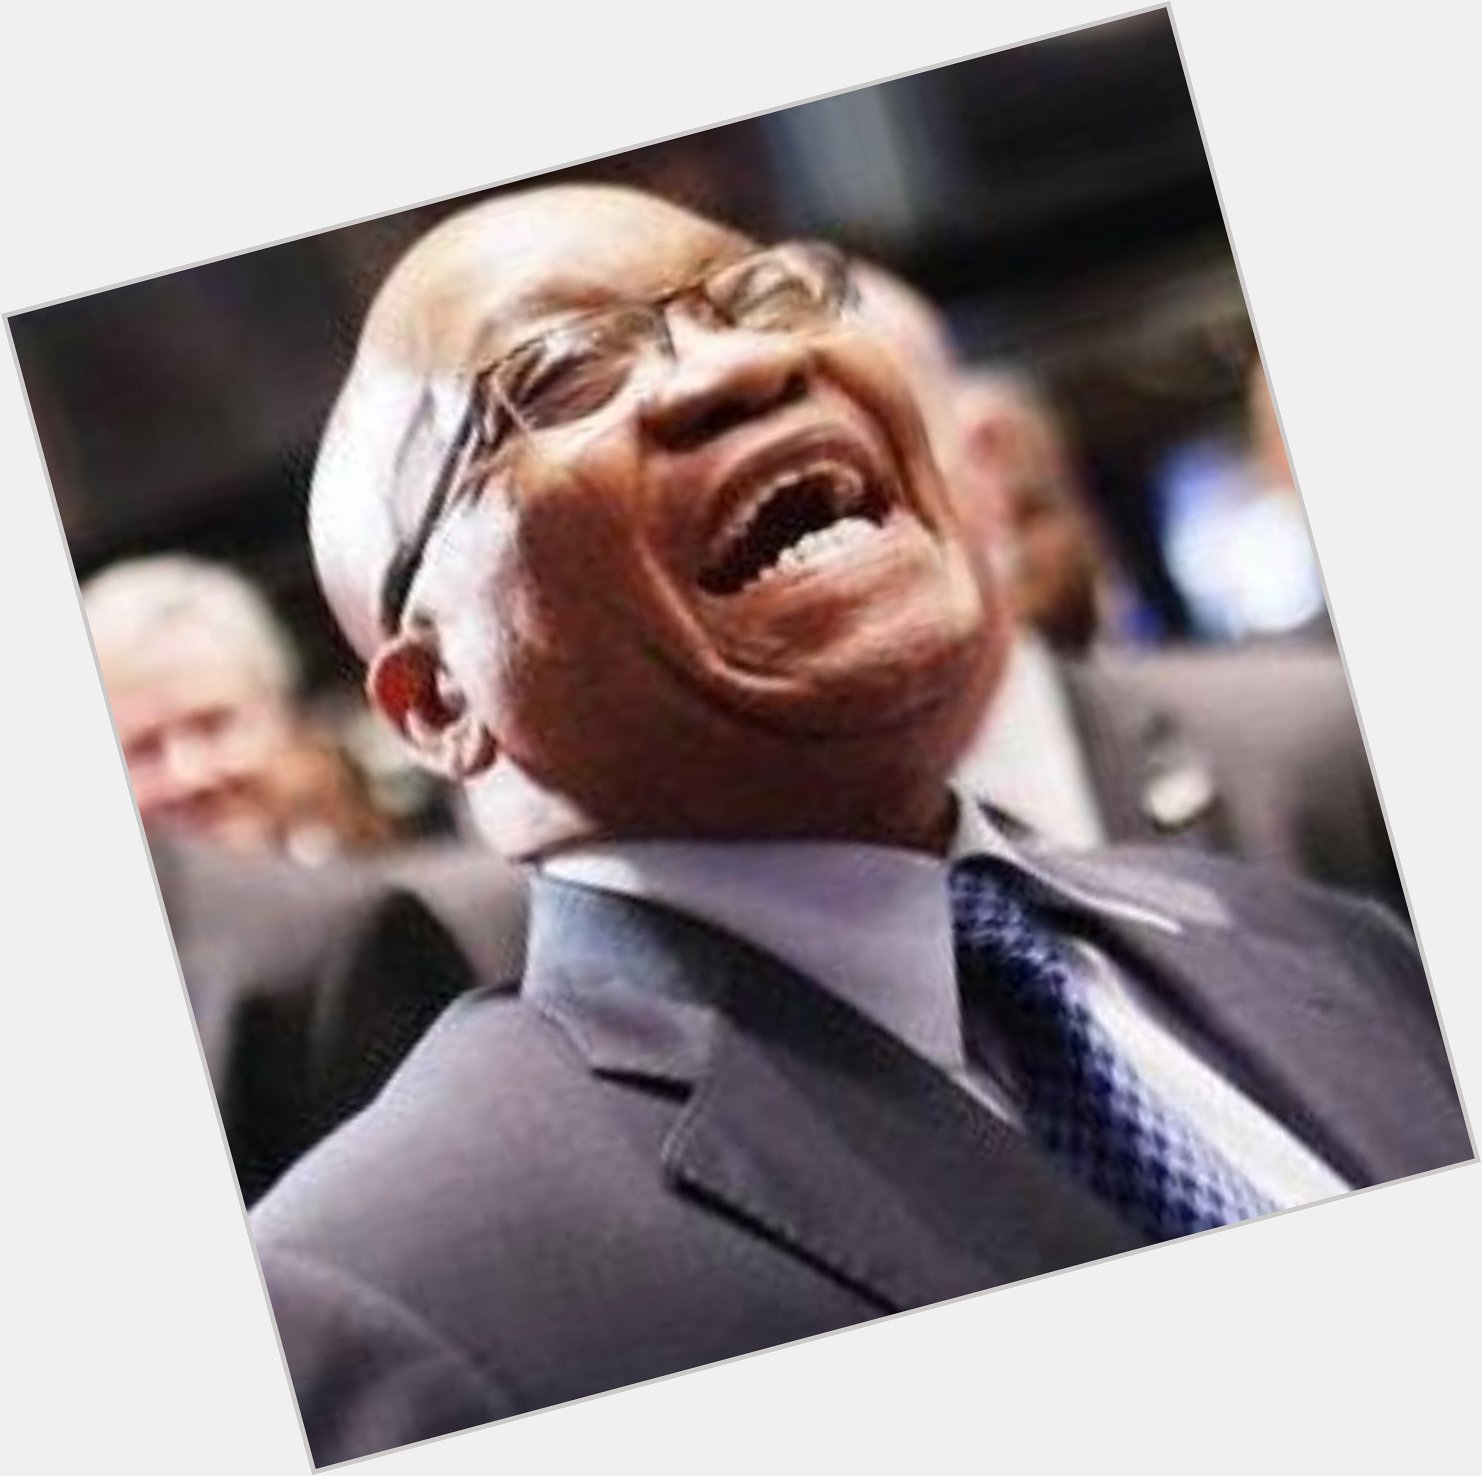 Happy birthday to Jacob Zuma.

What\s your favourite meme of ubaba ka duduzane 